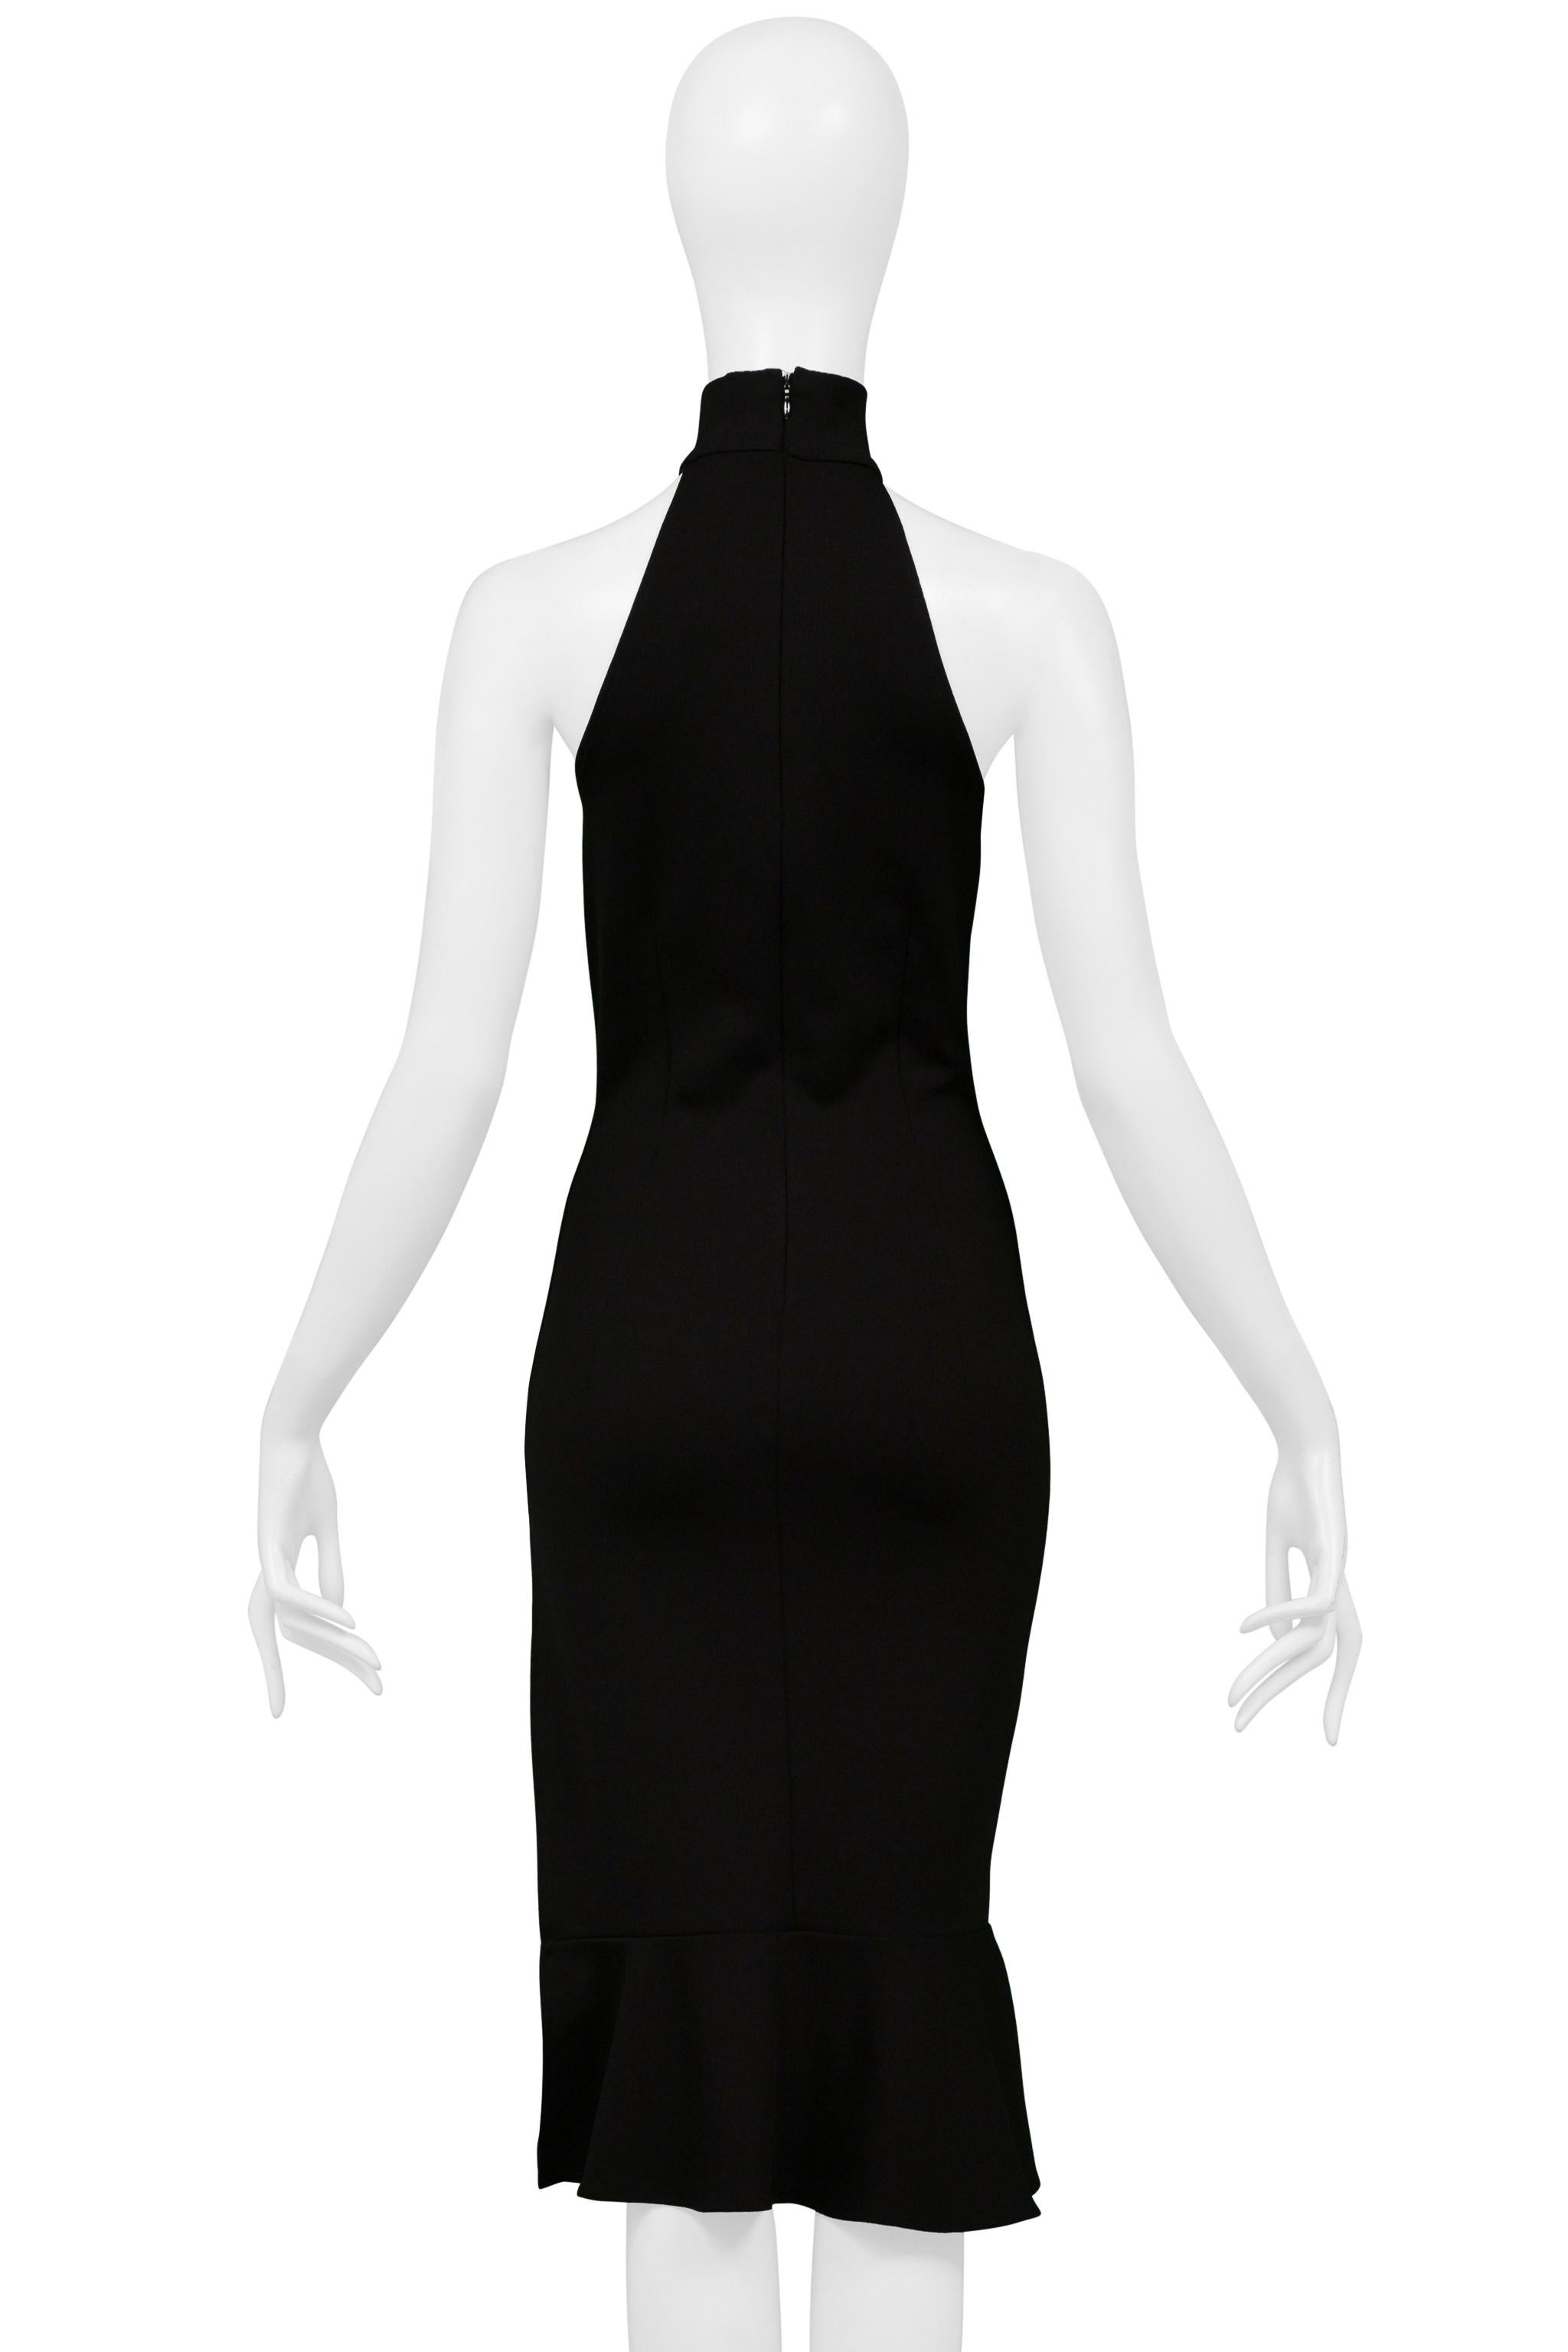 Docle & Gabbana Black High Neck Halter Dress For Sale 1